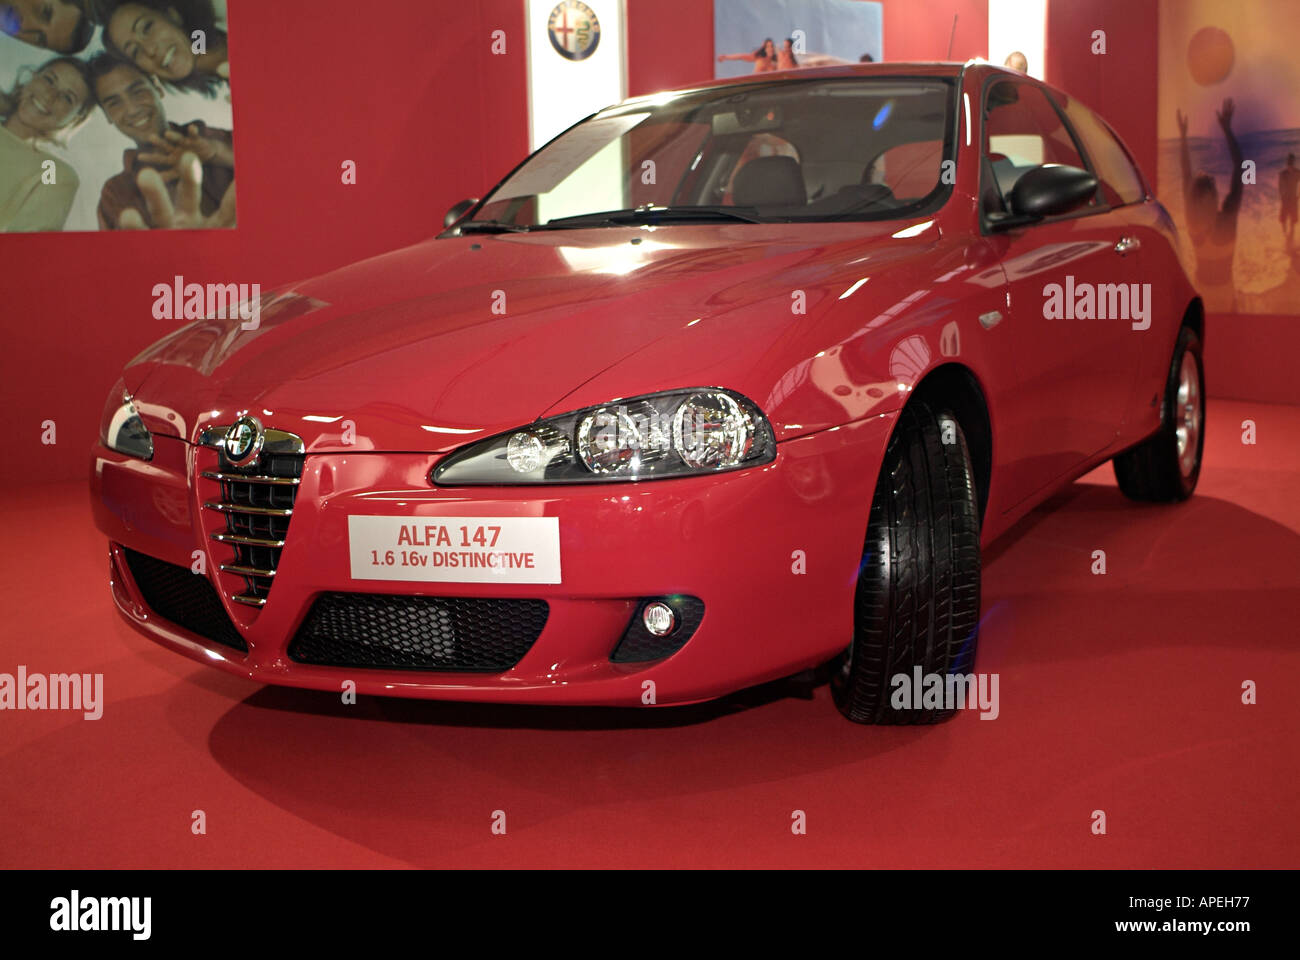 Alfa Romeo 147 images (2 of 11)